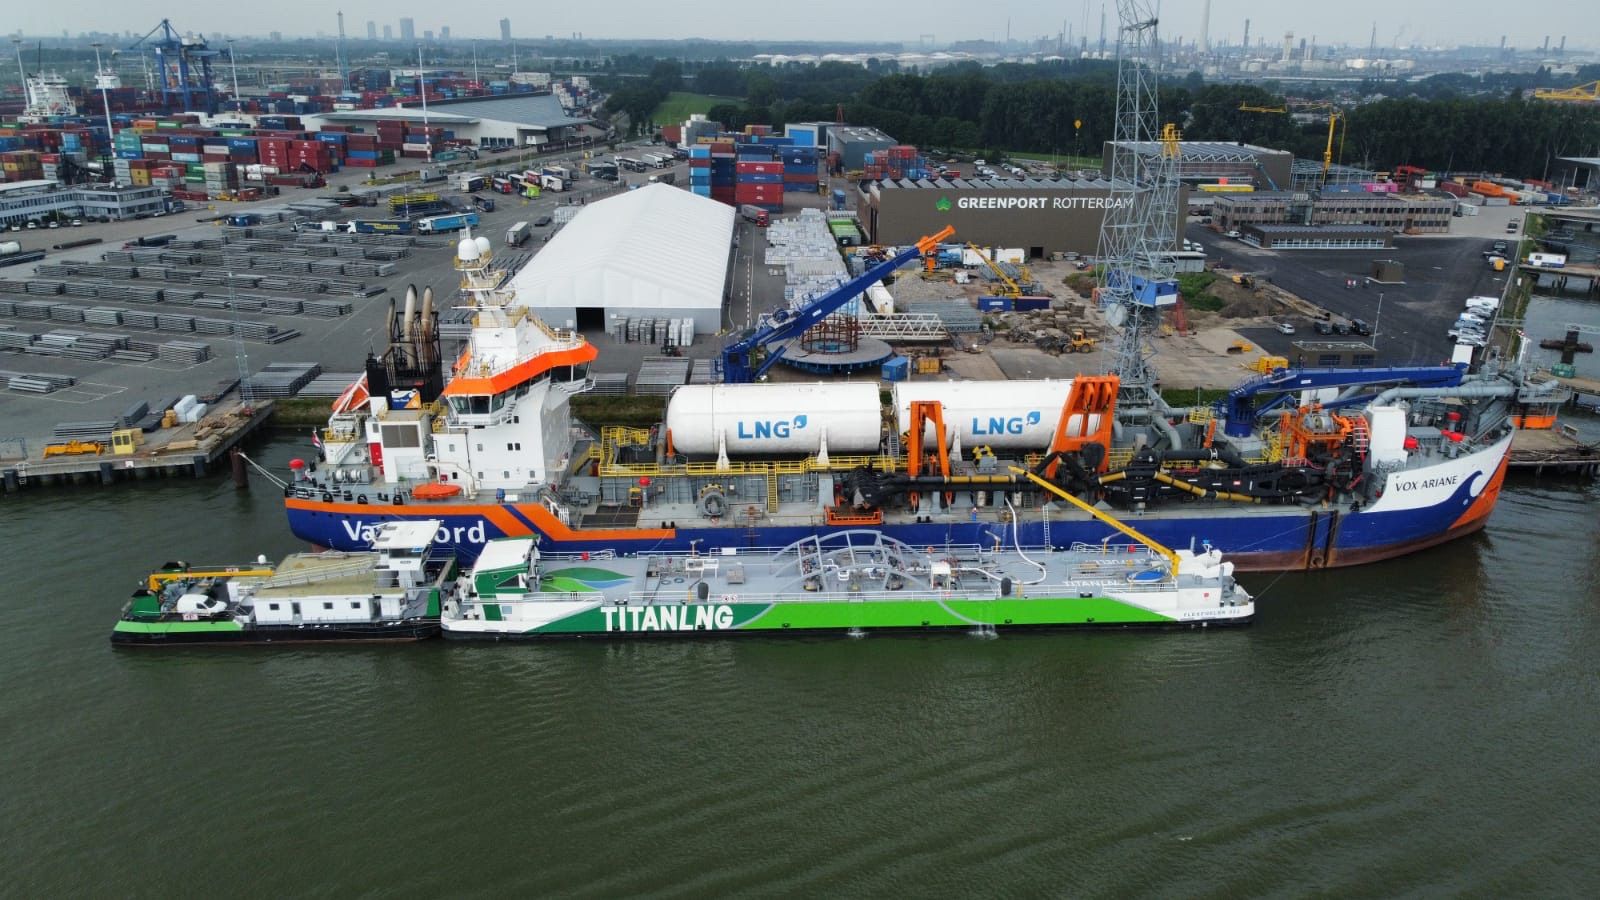 Titan delivers 350 tonnes of LNG to TSHD Vox Ariane